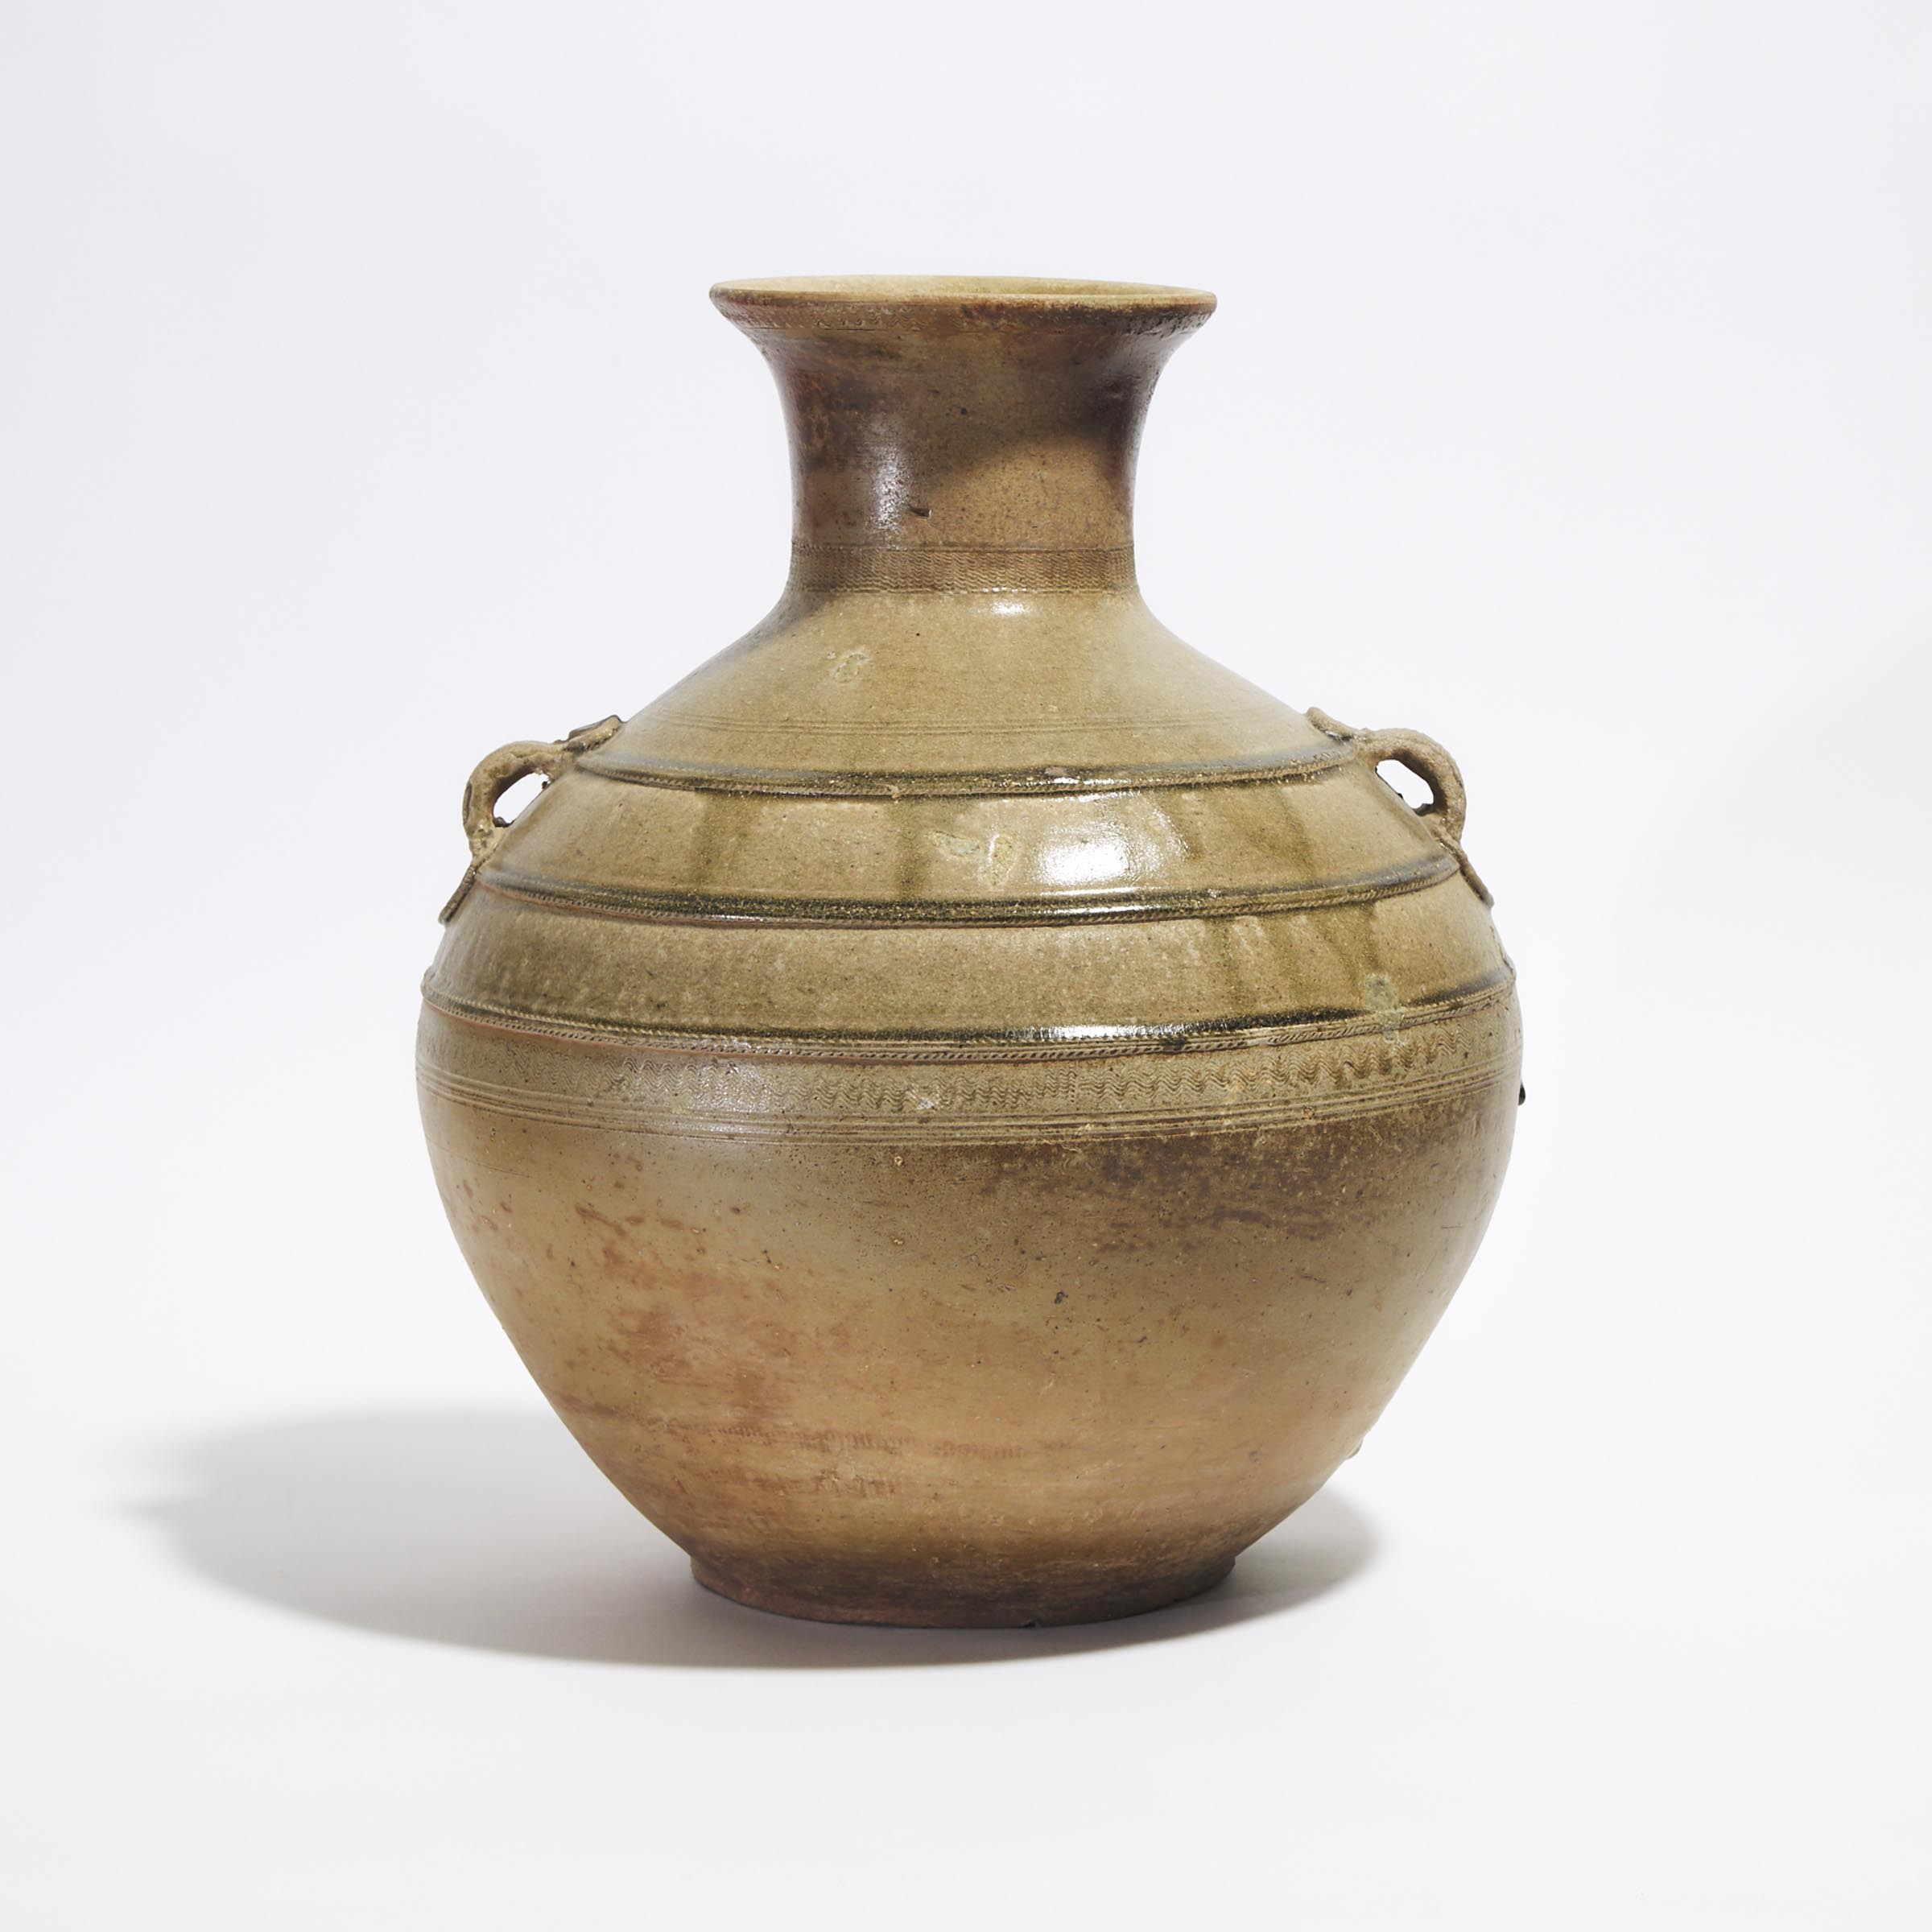 A Large Olive-Glazed 'Hu' Vase, Han Dynasty (206 BC - AD 220)